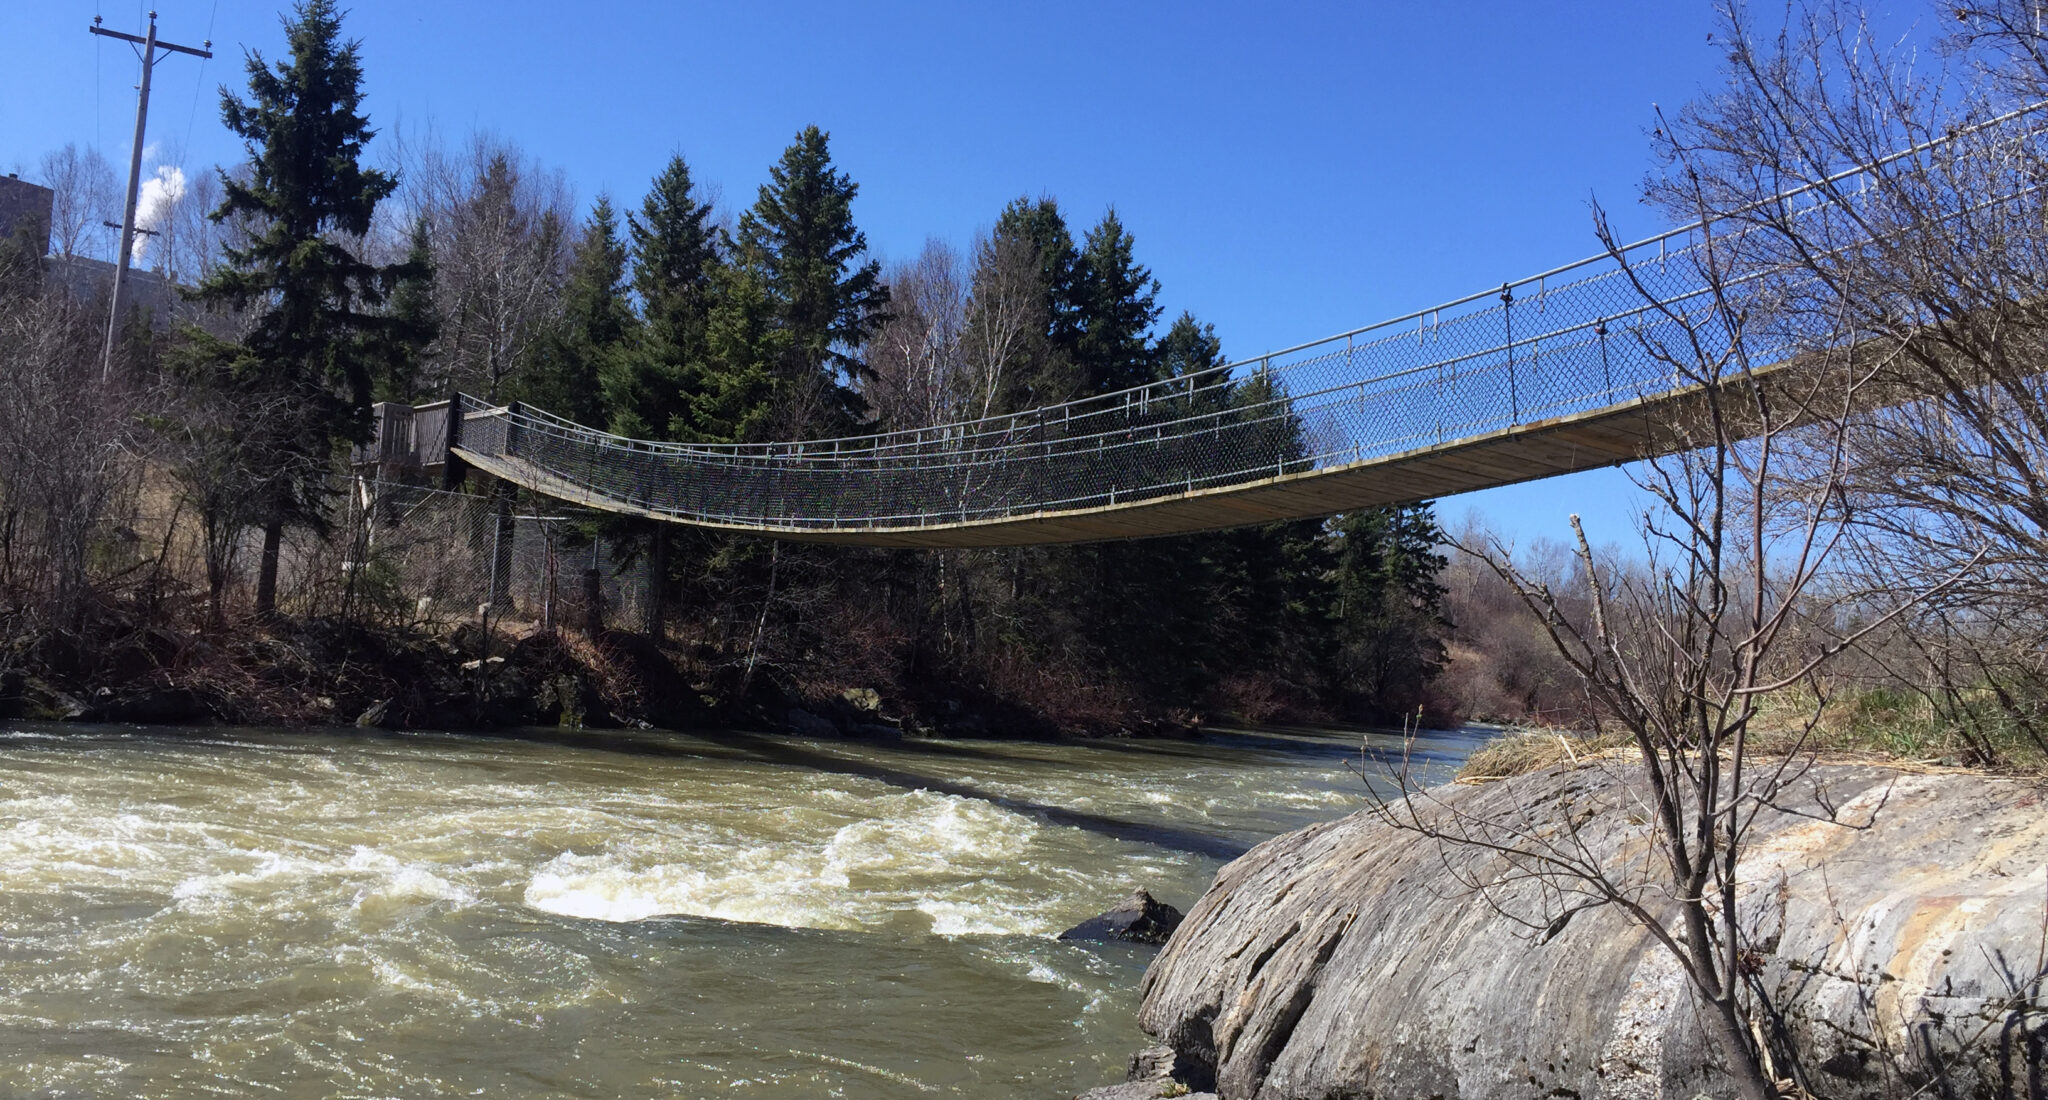 Dryden Ontario landmark, the suspension bridge on a beautiful sunny day.